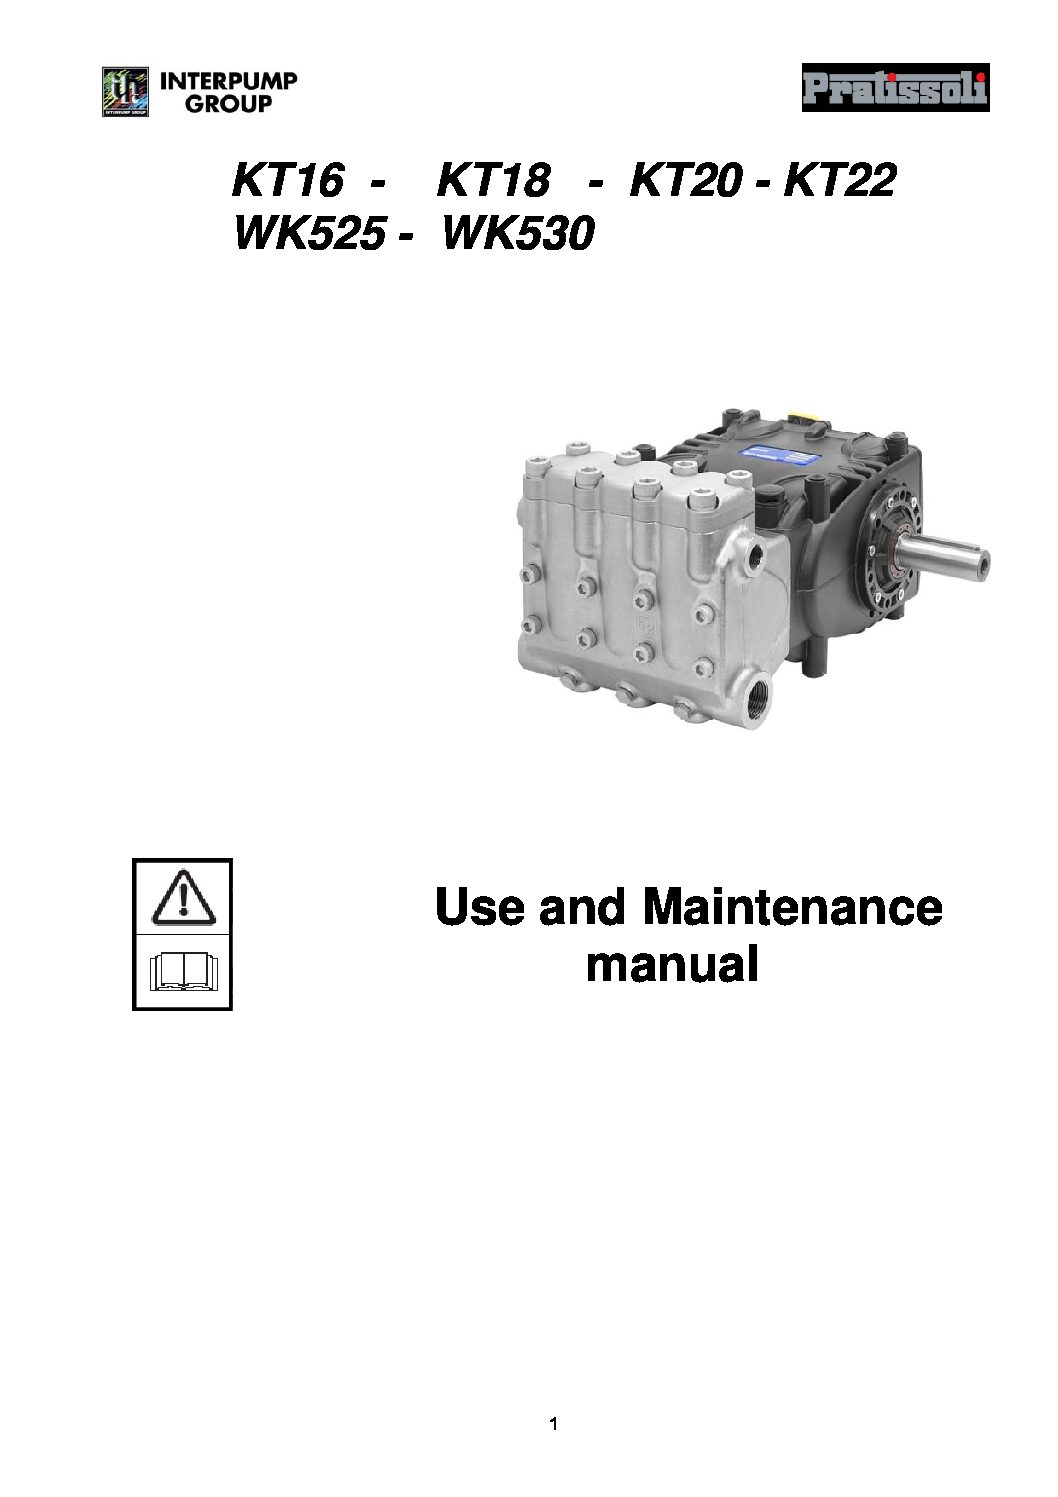 Pratissoli KT HP Series Plunger Pumps Main Manual